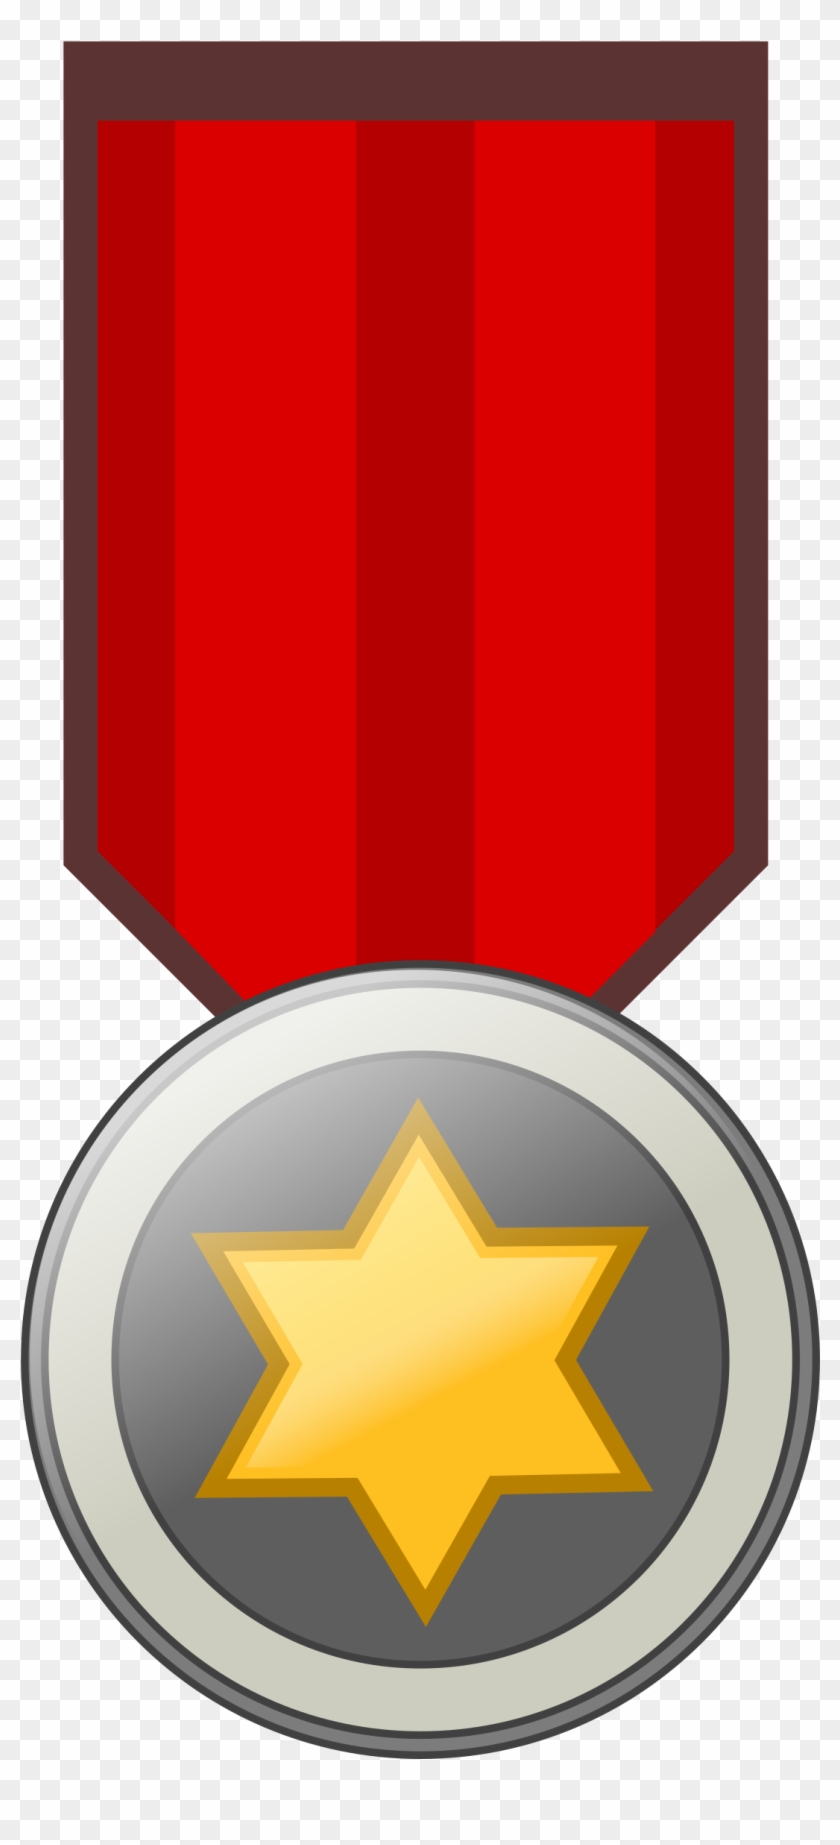 Award Medal Remix Badge - Awards Medal Logo Transparent #376657